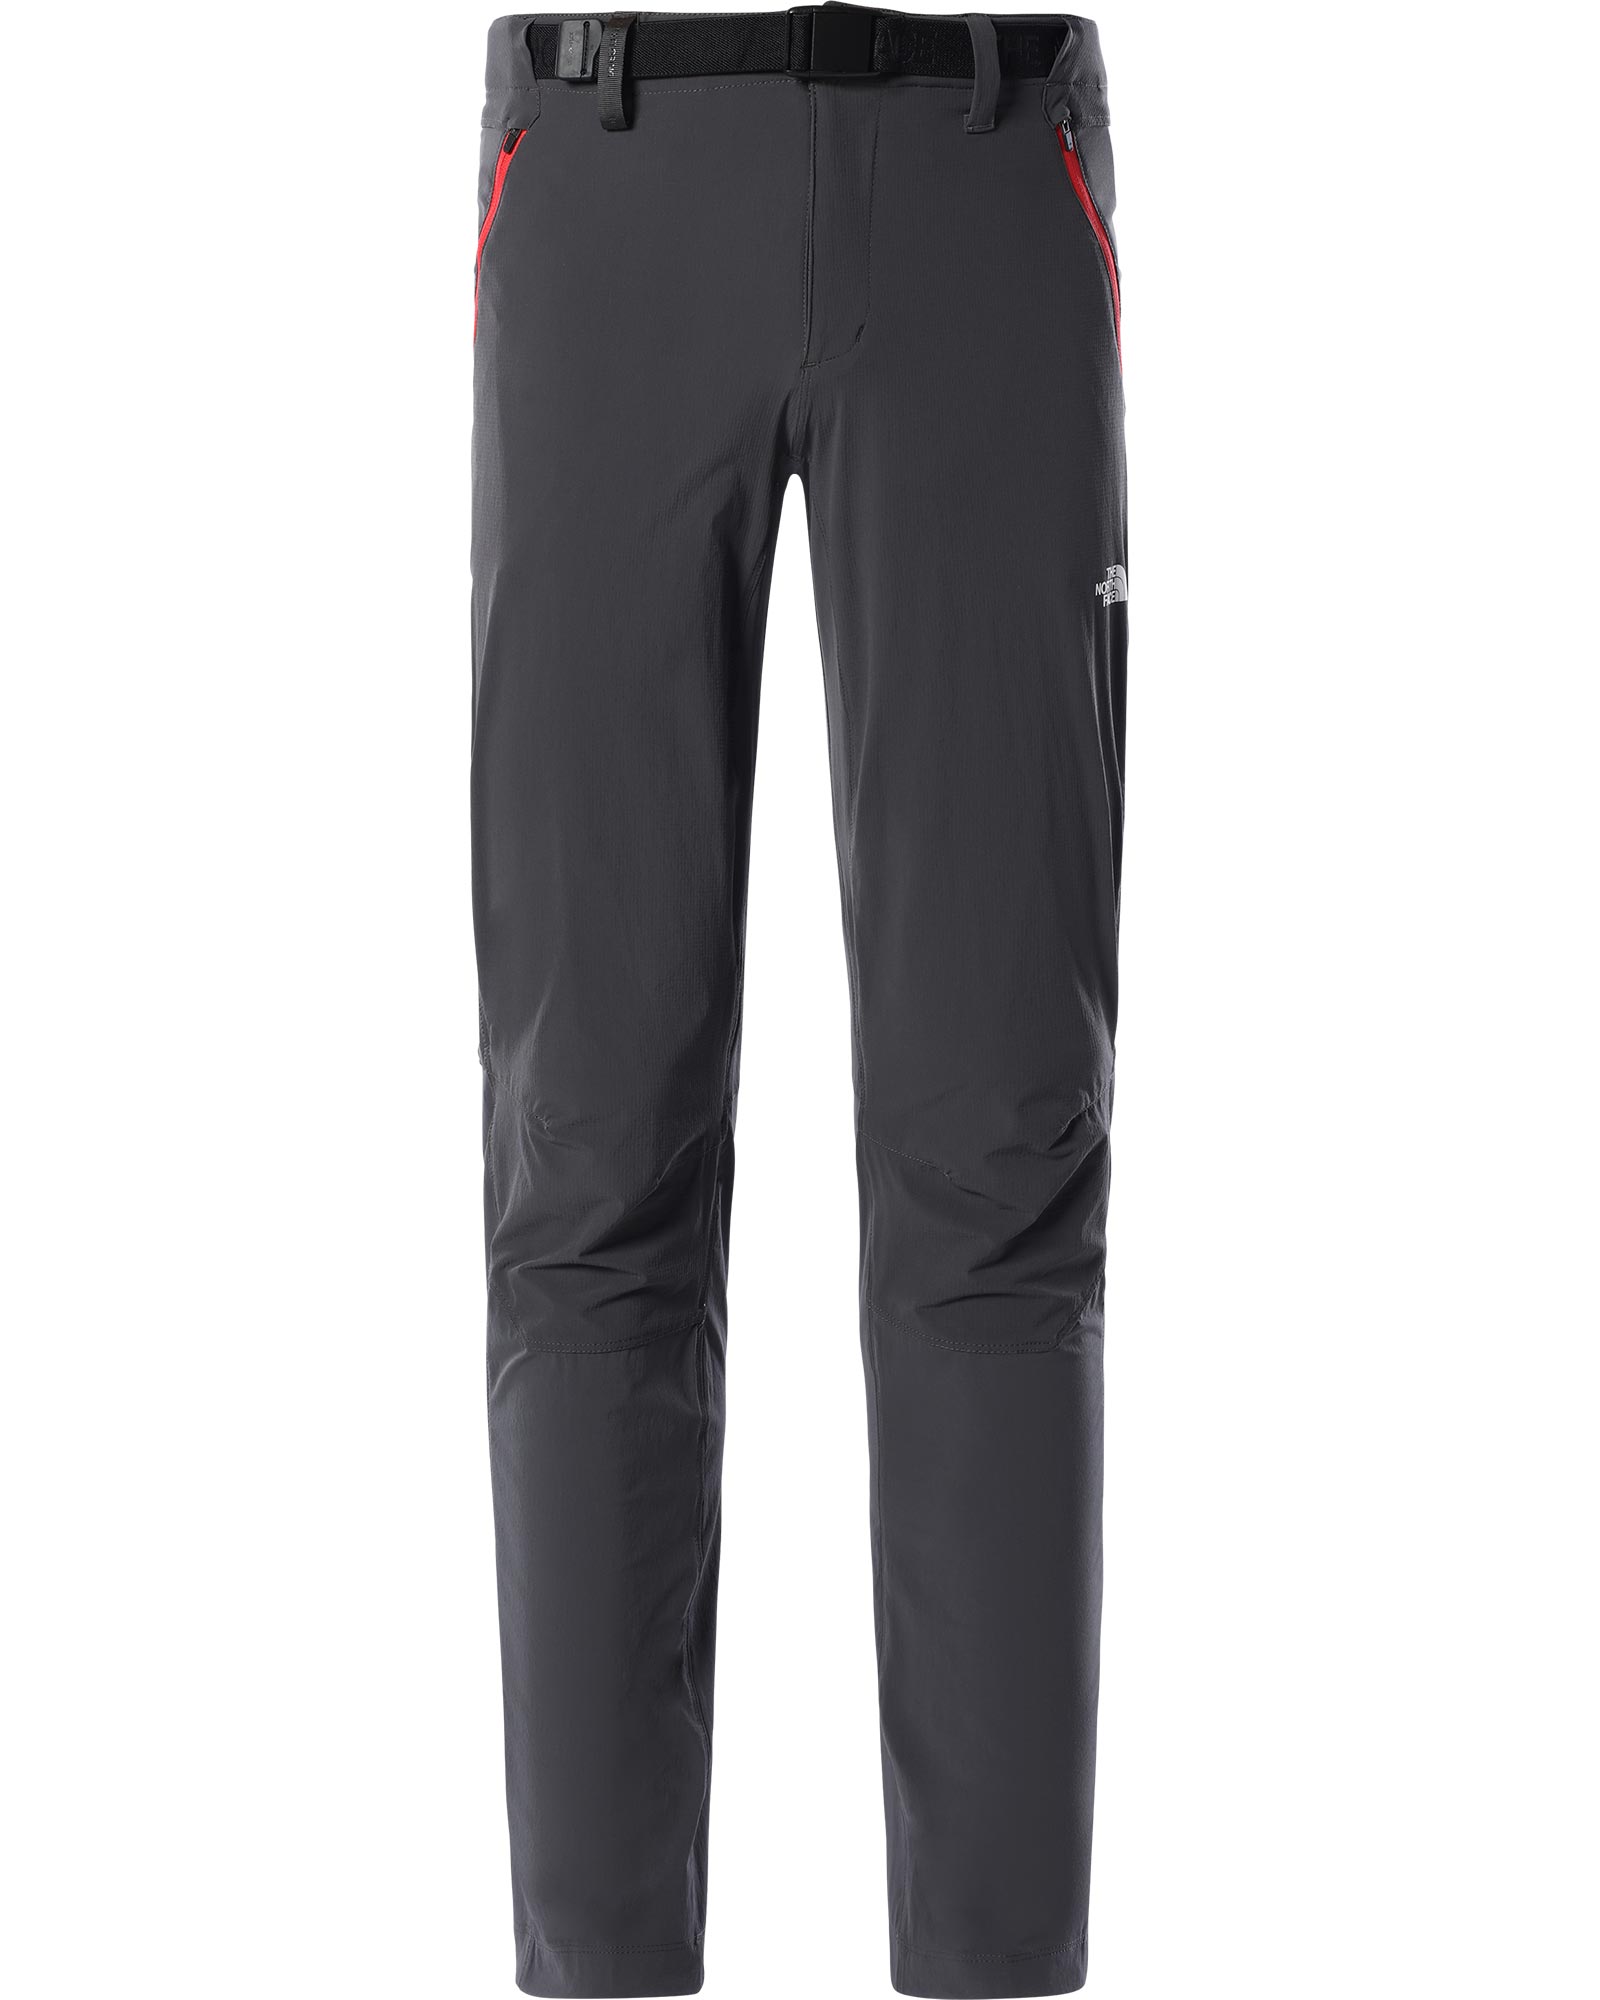 The North Face Speedlight 2 Women’s Pants - Asphalt Grey/Horizon Red 12